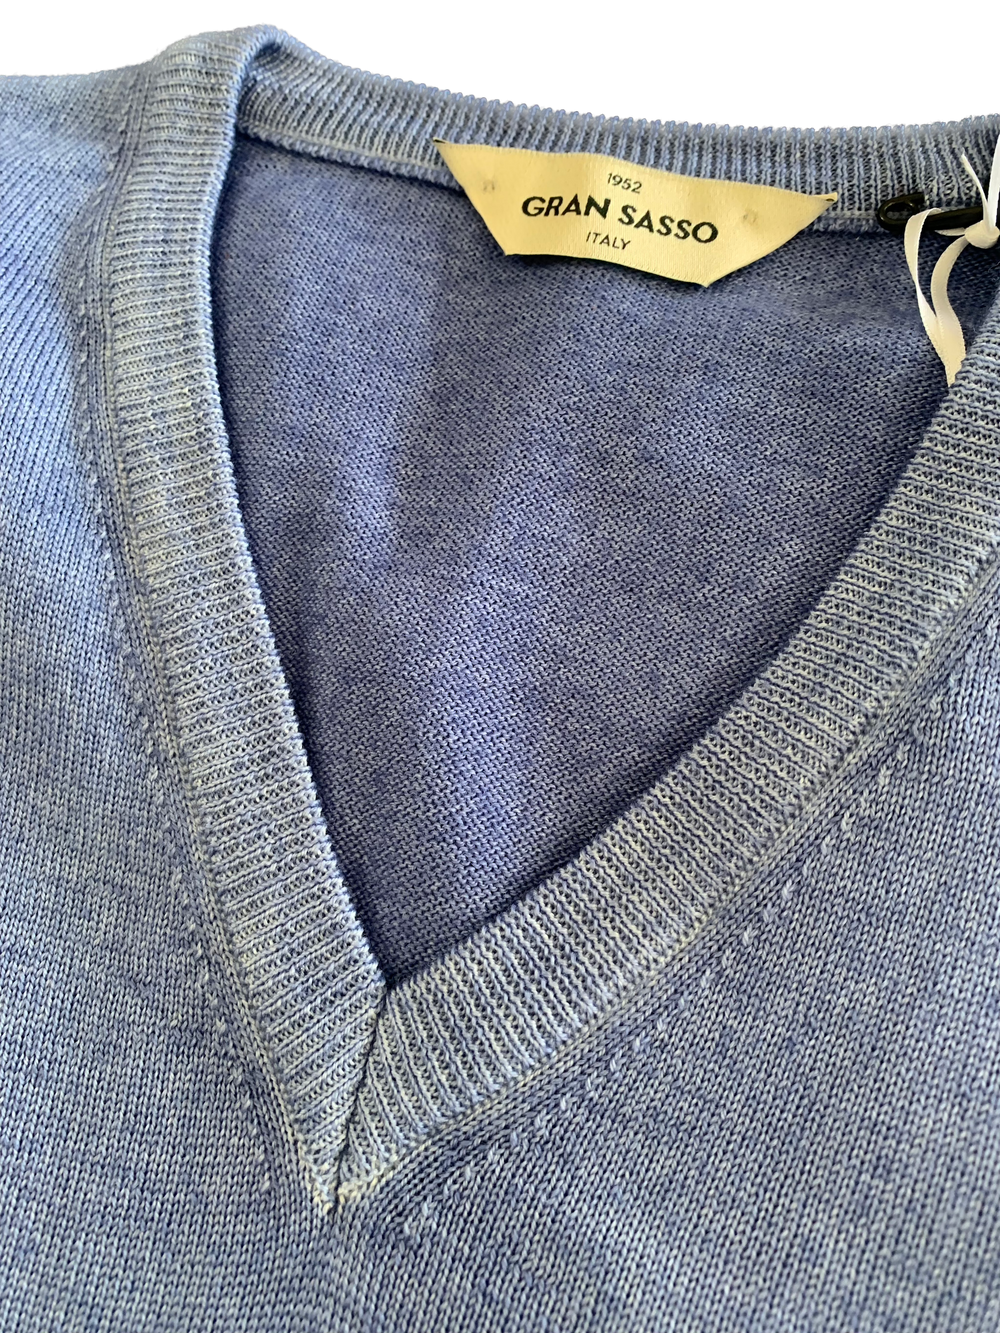 Gran Sasso - Men's Vintage Merino V-Neck Knit in Blue | Buster McGee